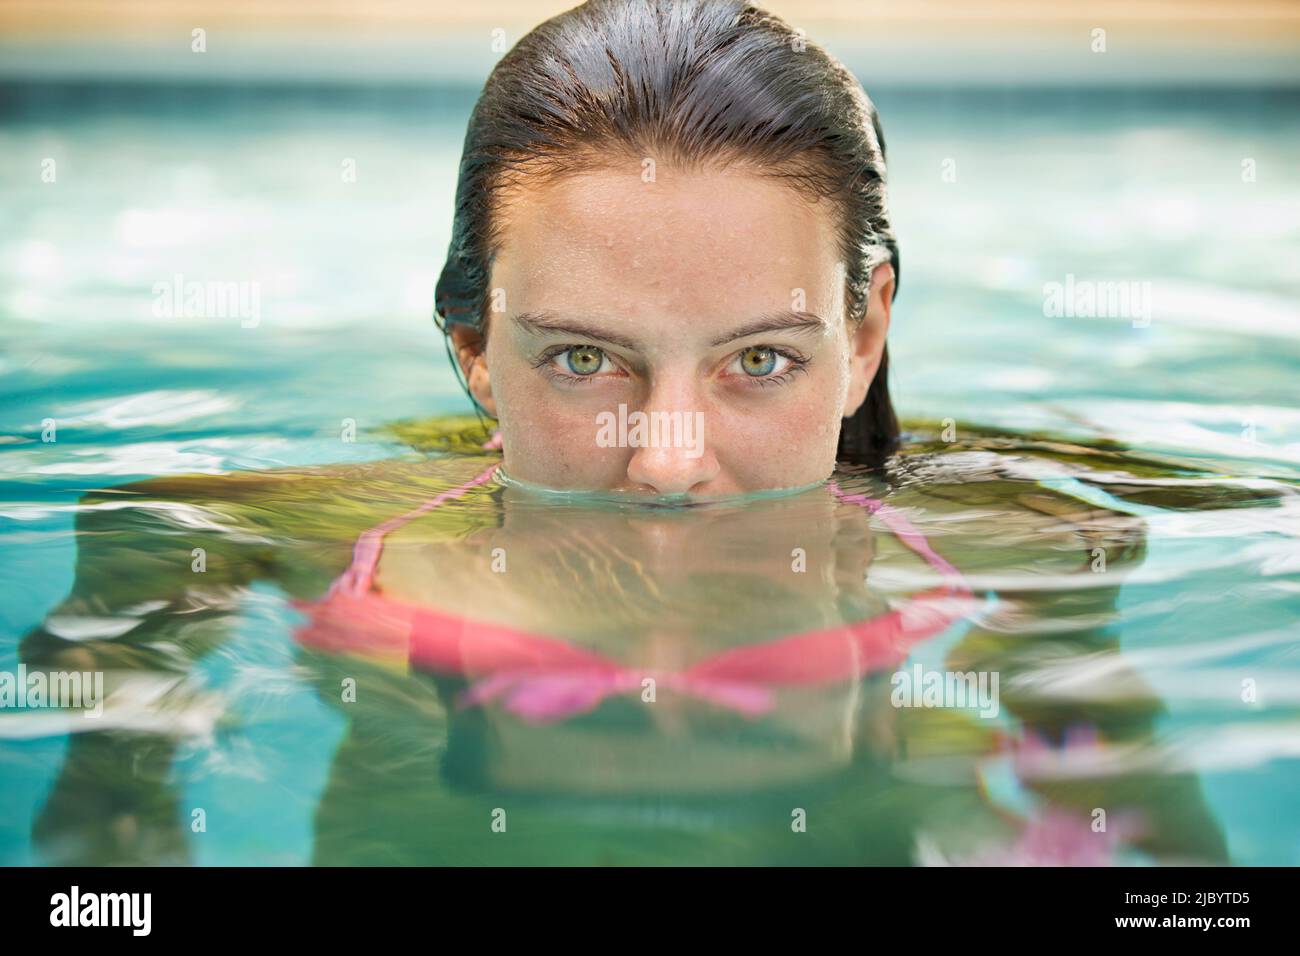 Frau, Schwimmen im pool Stockfoto